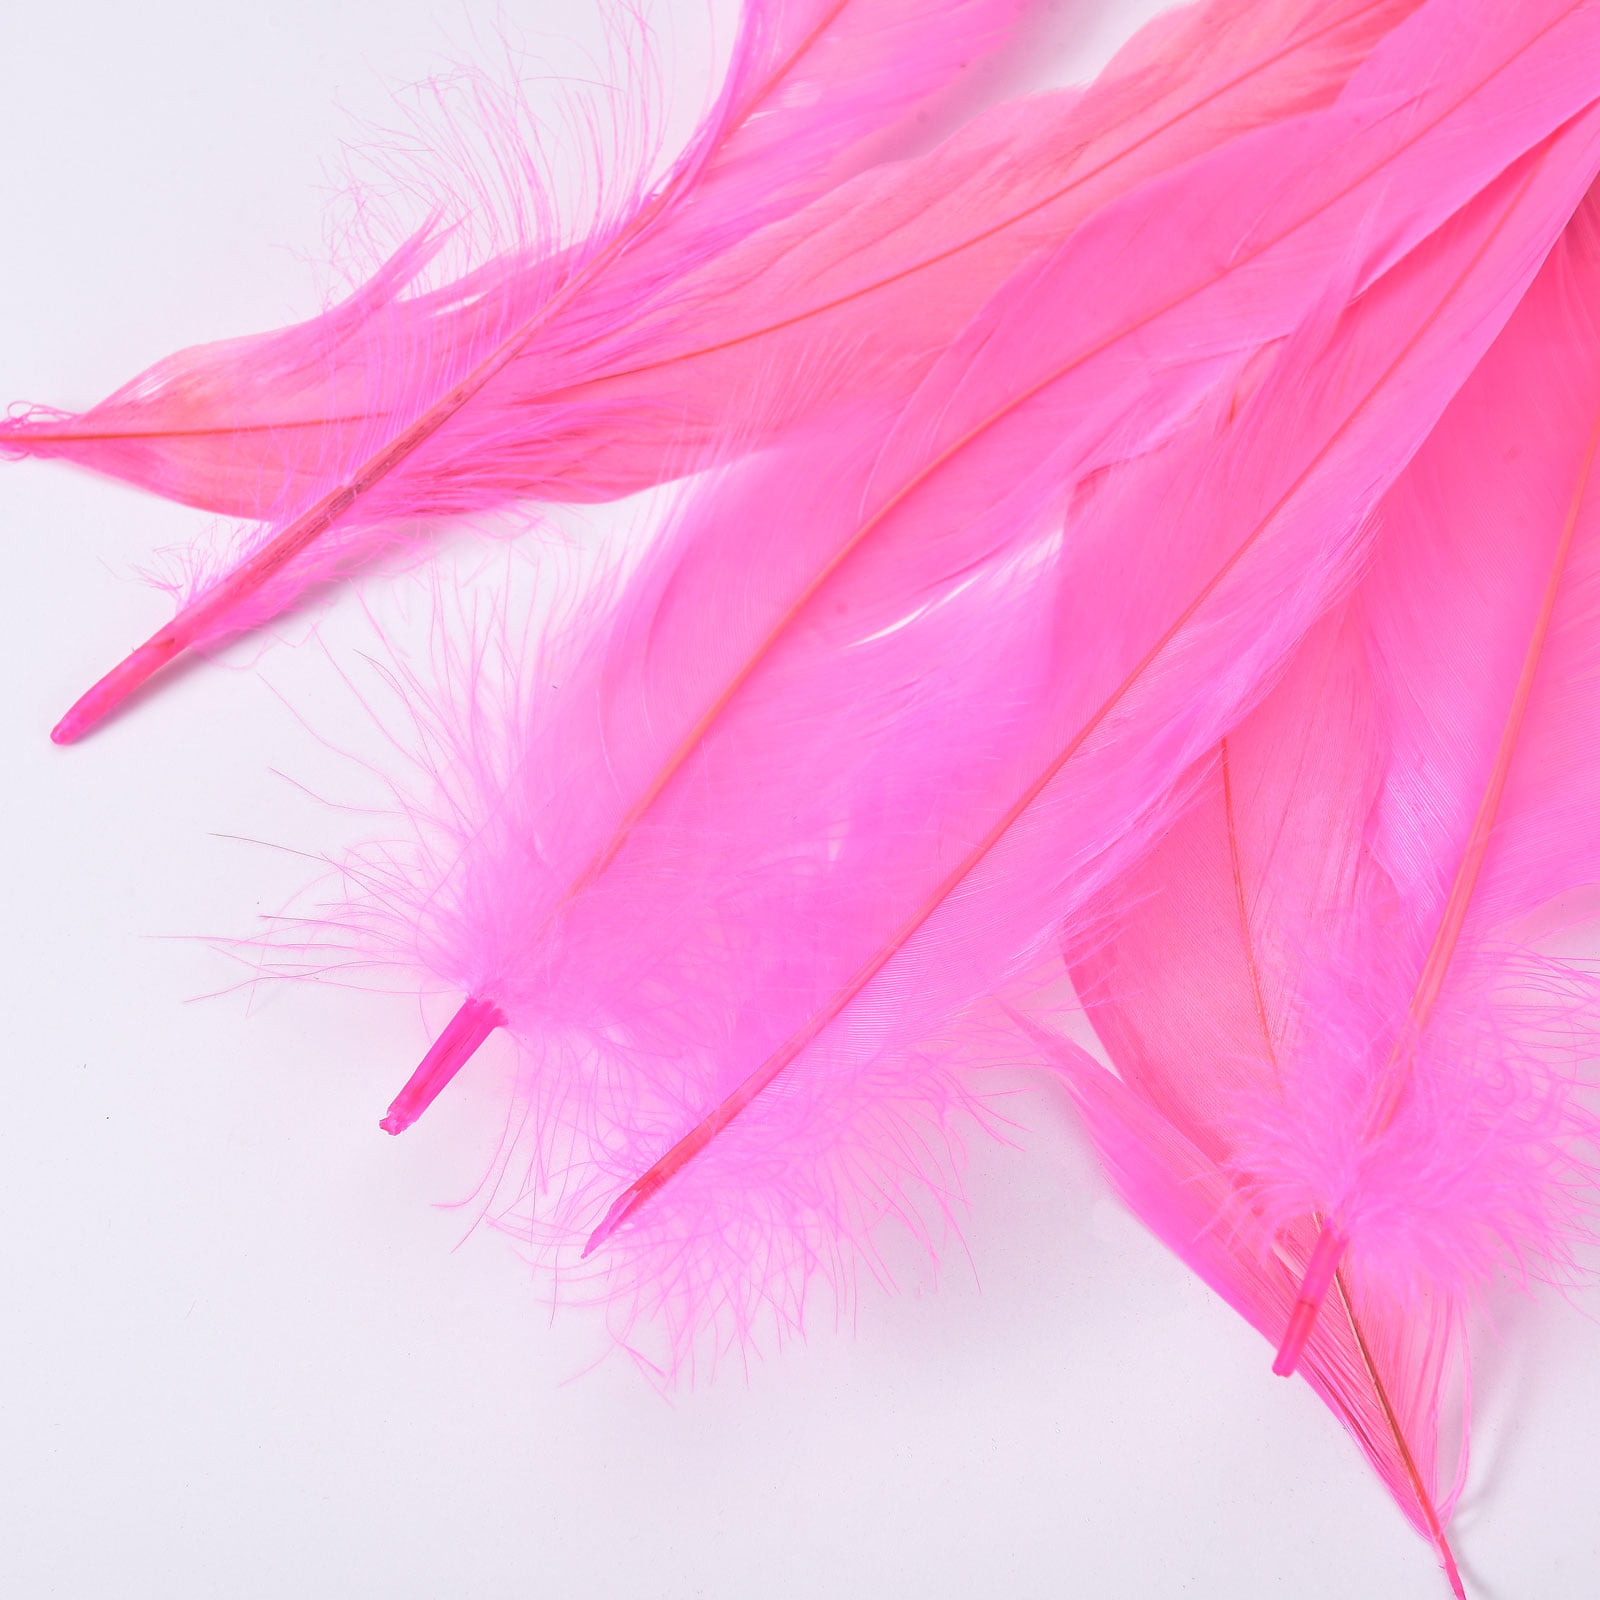 Hot Pink/Fuchsia Ostrich Feathers Wholesale BULK DISCOUNT DOZEN PROMS12-14  inch 12 Pieces Wedding Centerpieces Crafts performance art DOZEN Bulk  distributor